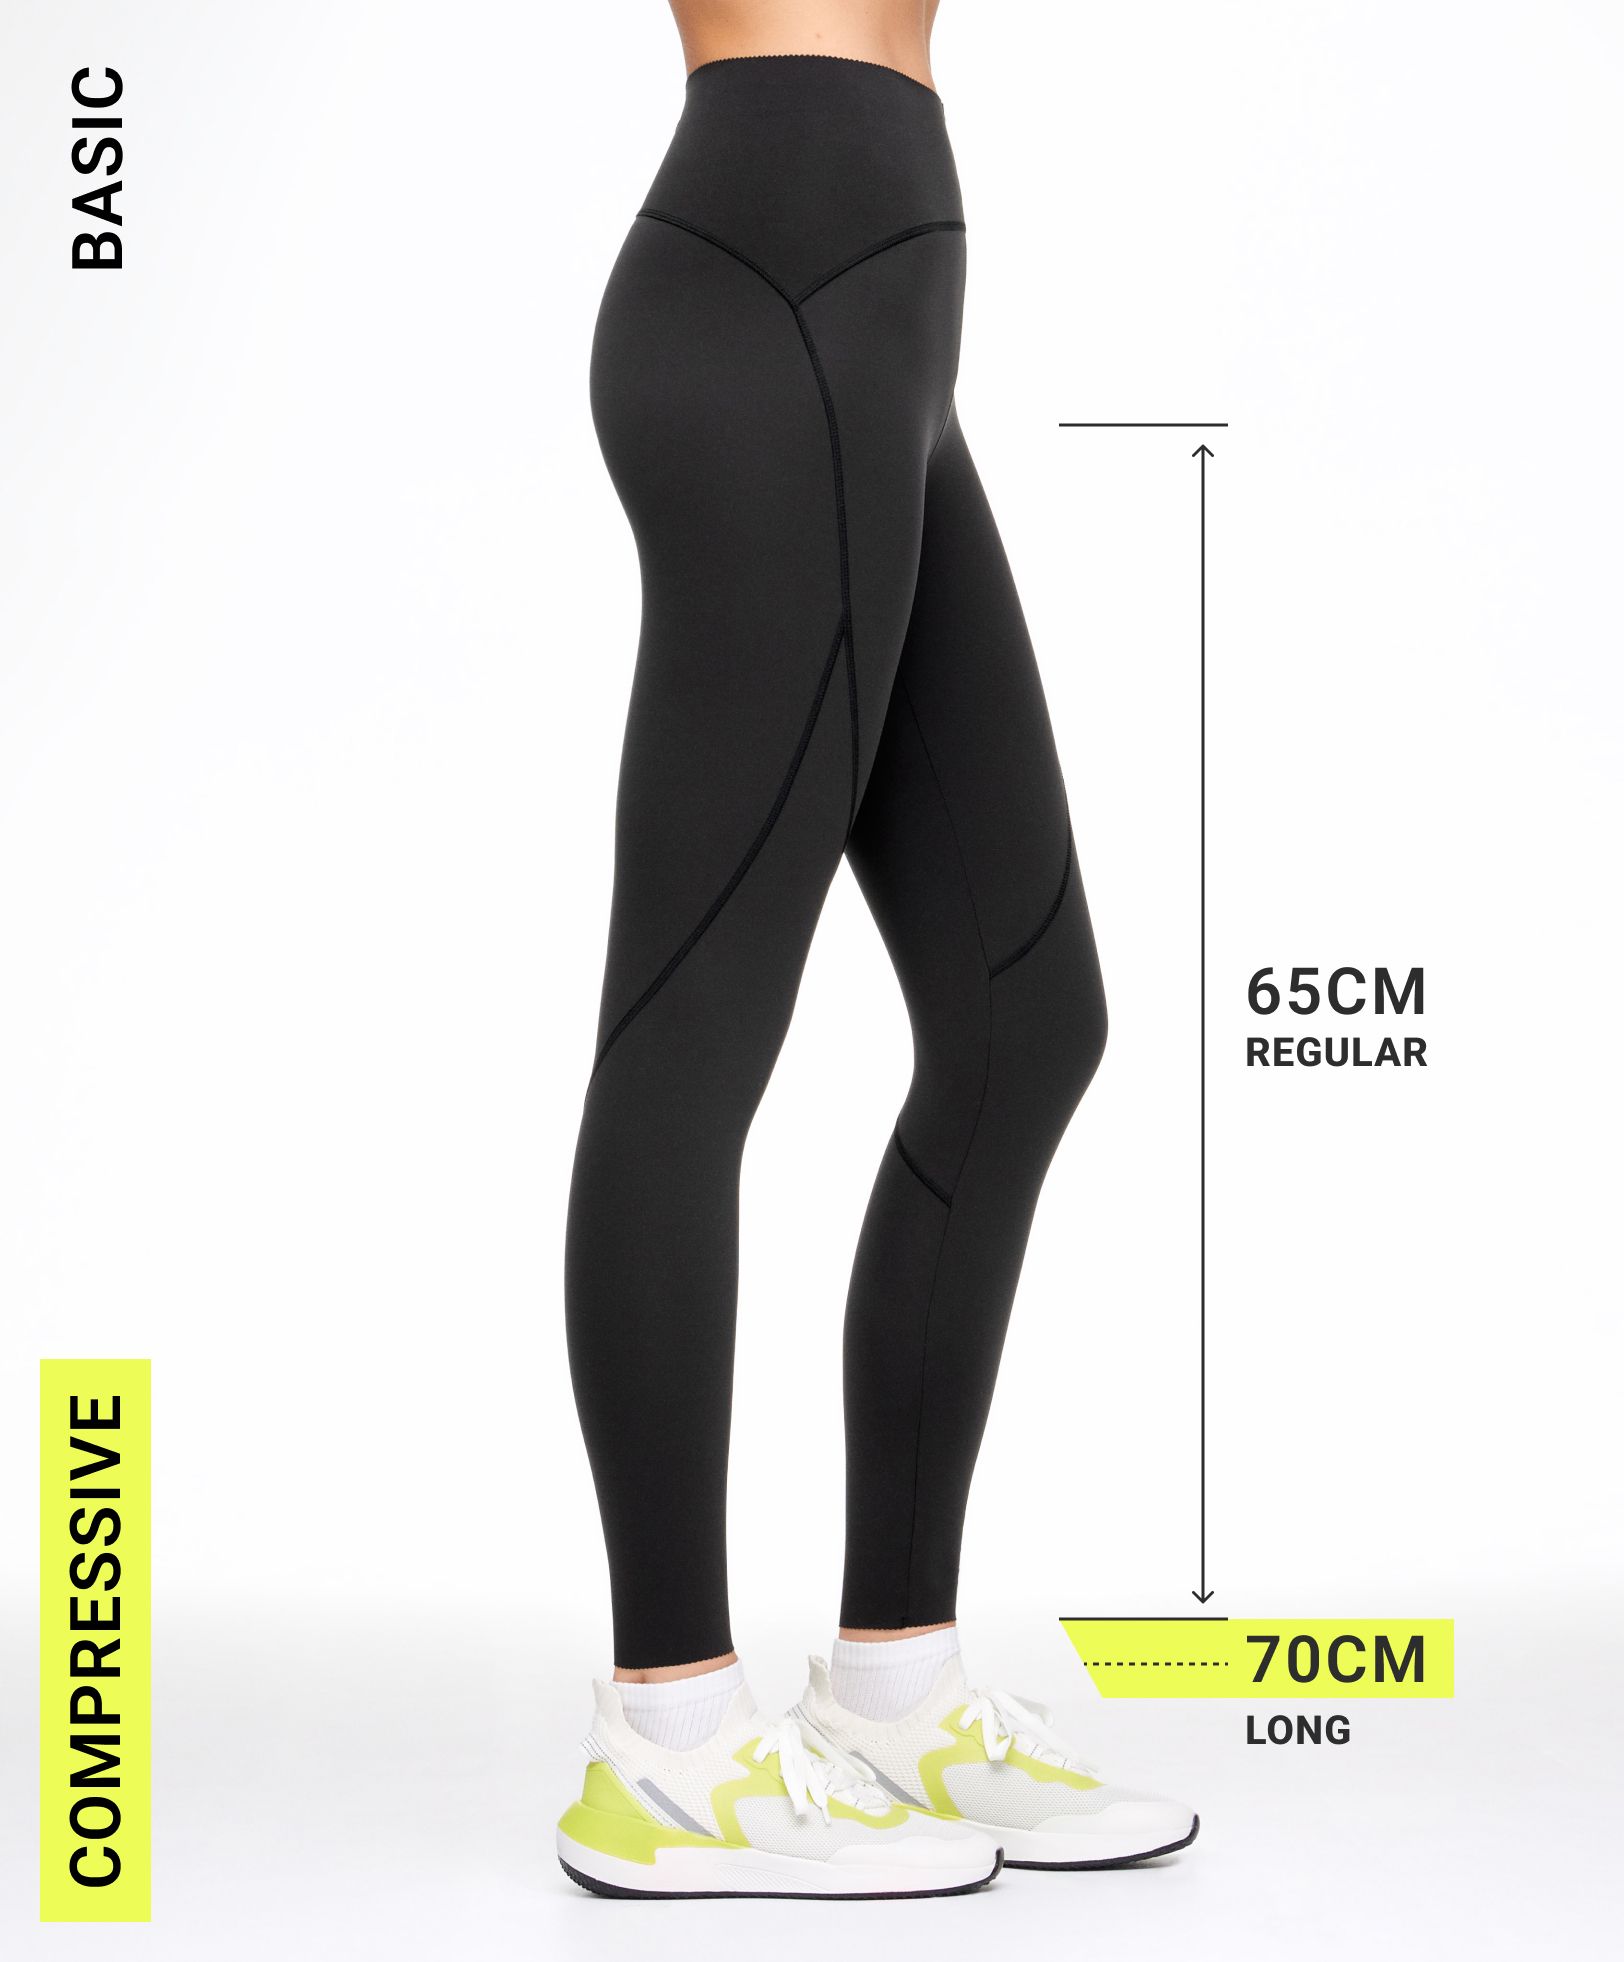 Basic compressive 65cm ankle-length leggings